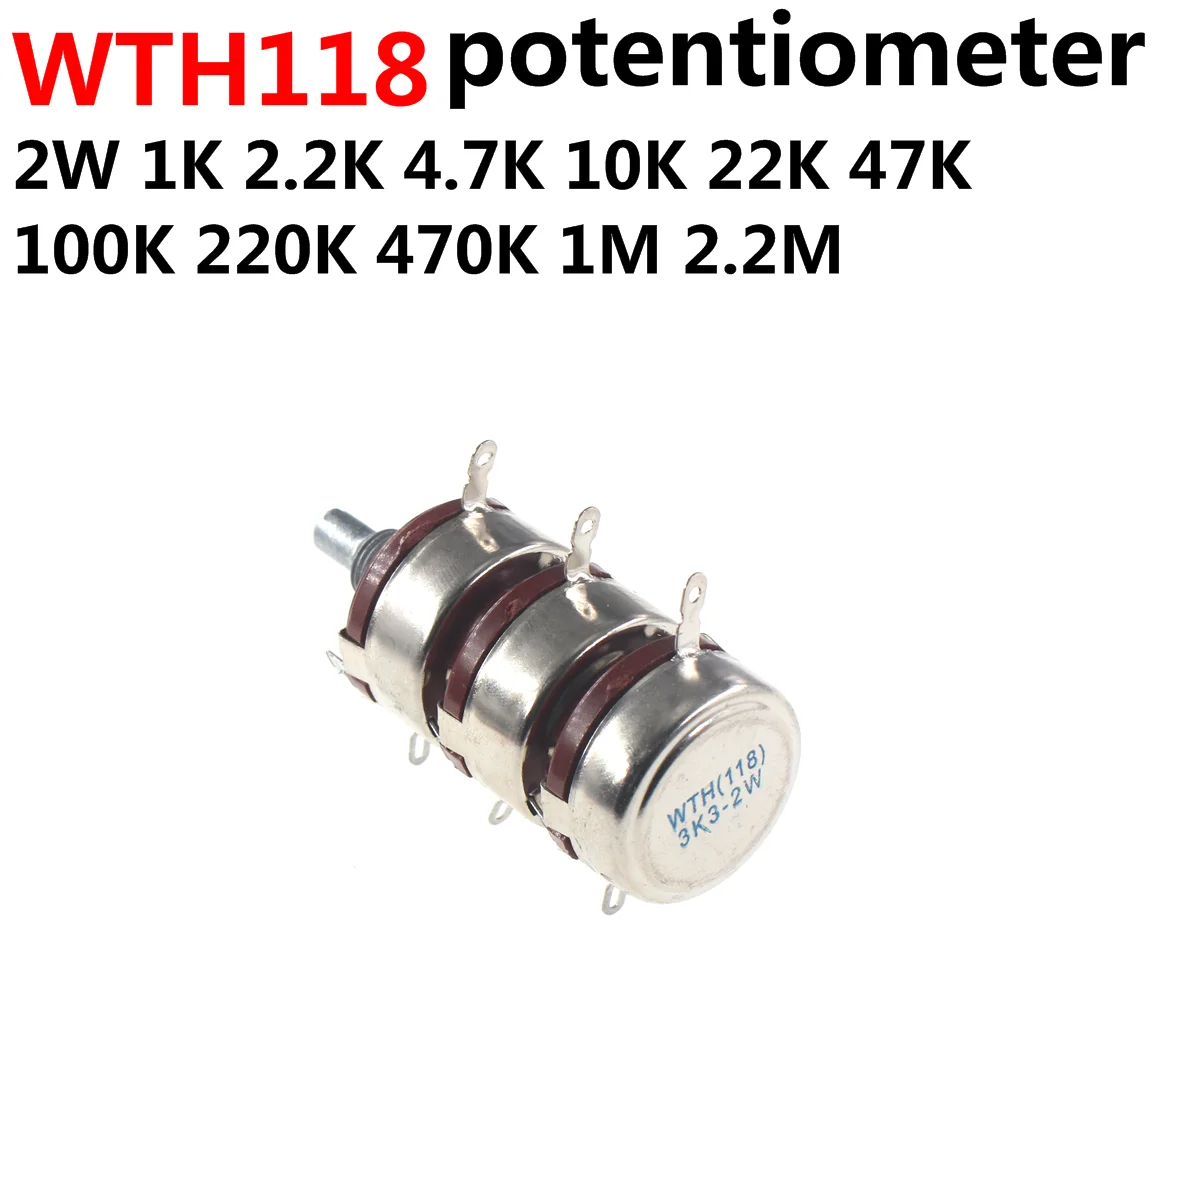 

WTH118-3 2W 1A triplet triple Potentiometer WTH118-1A 2W 470R 1K 2.2K 2K2 3K3 10K 47K 100K 150K 220K 470K 500K 560K 1M 2.2M